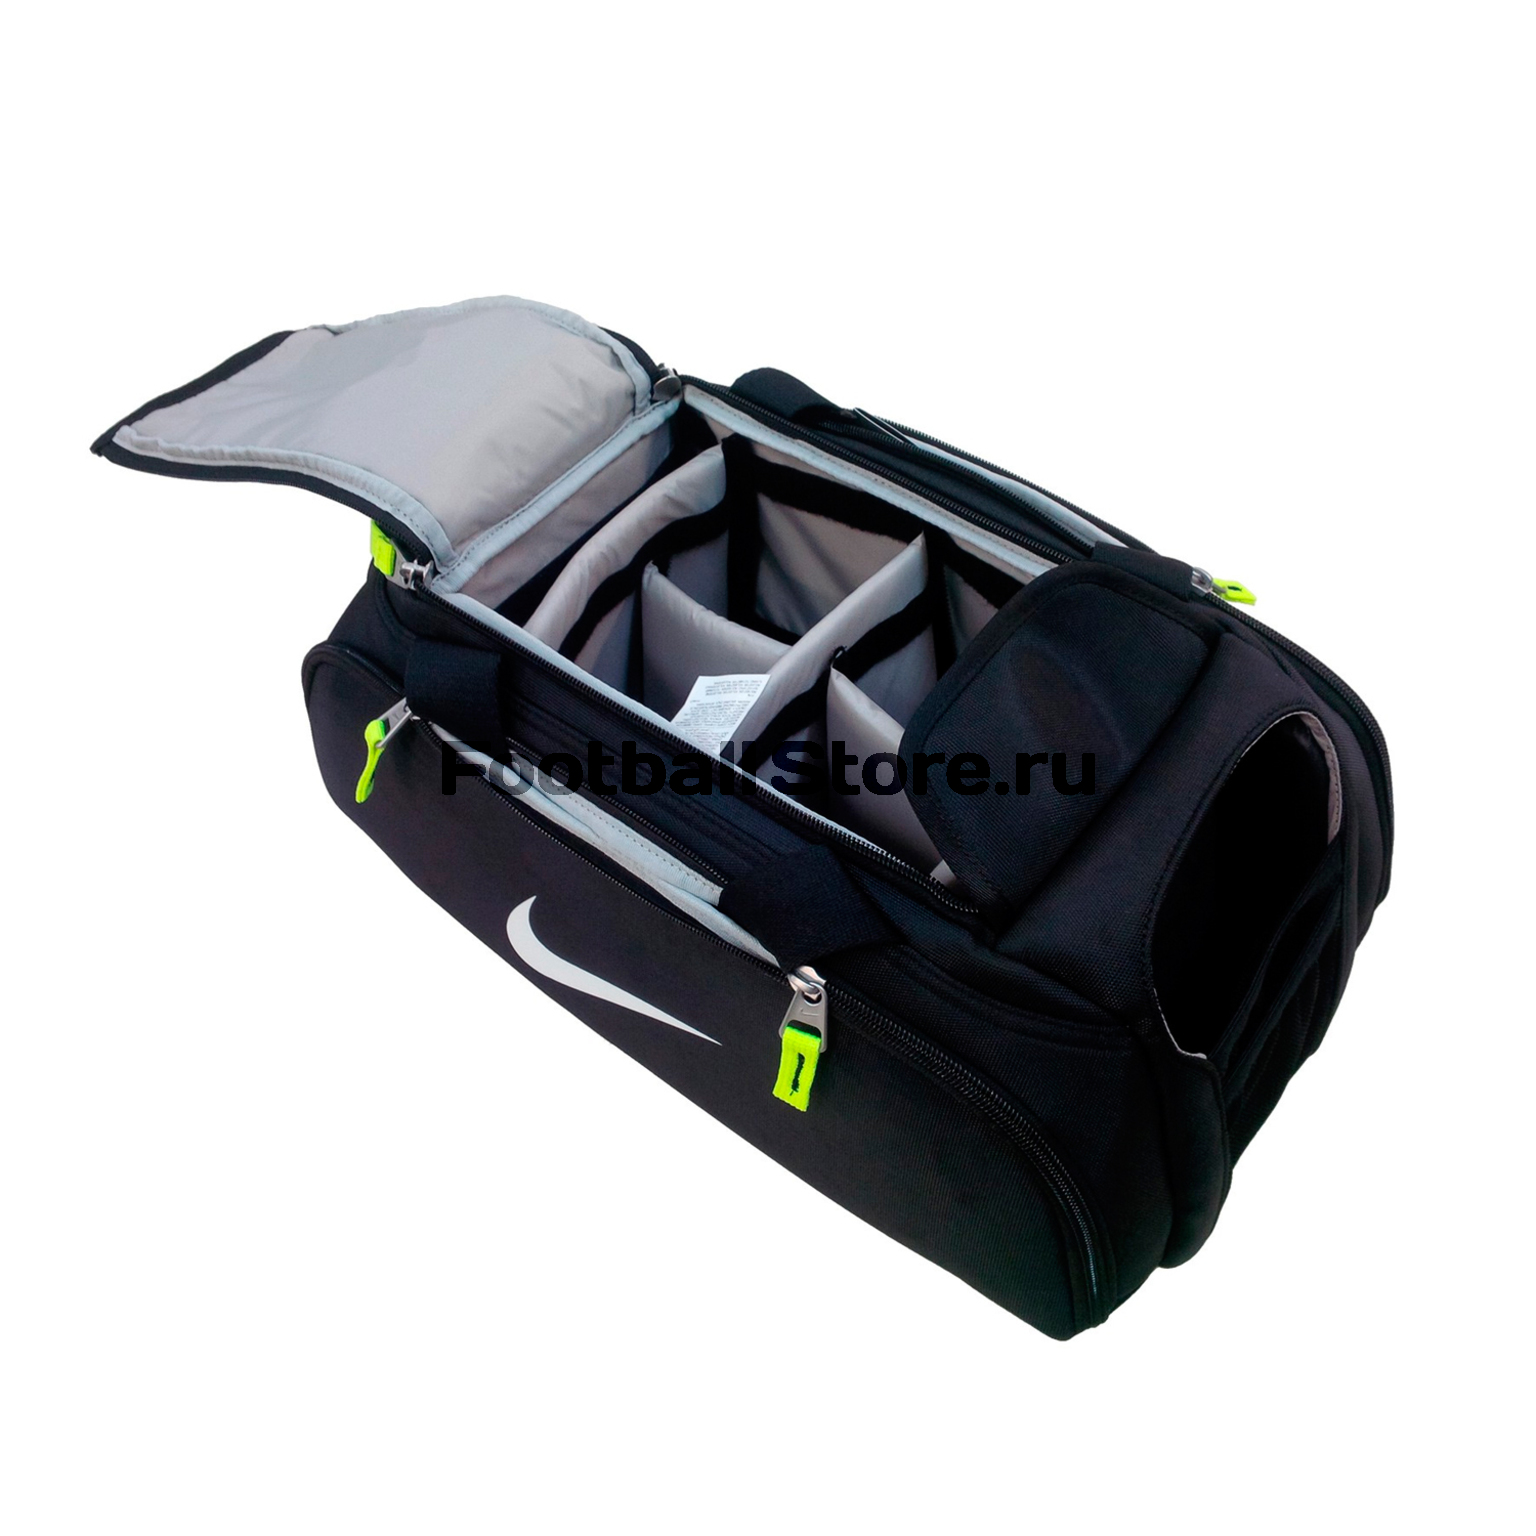 Сумка медицинская Nike Medical Bag 3.0 PBZ343-071